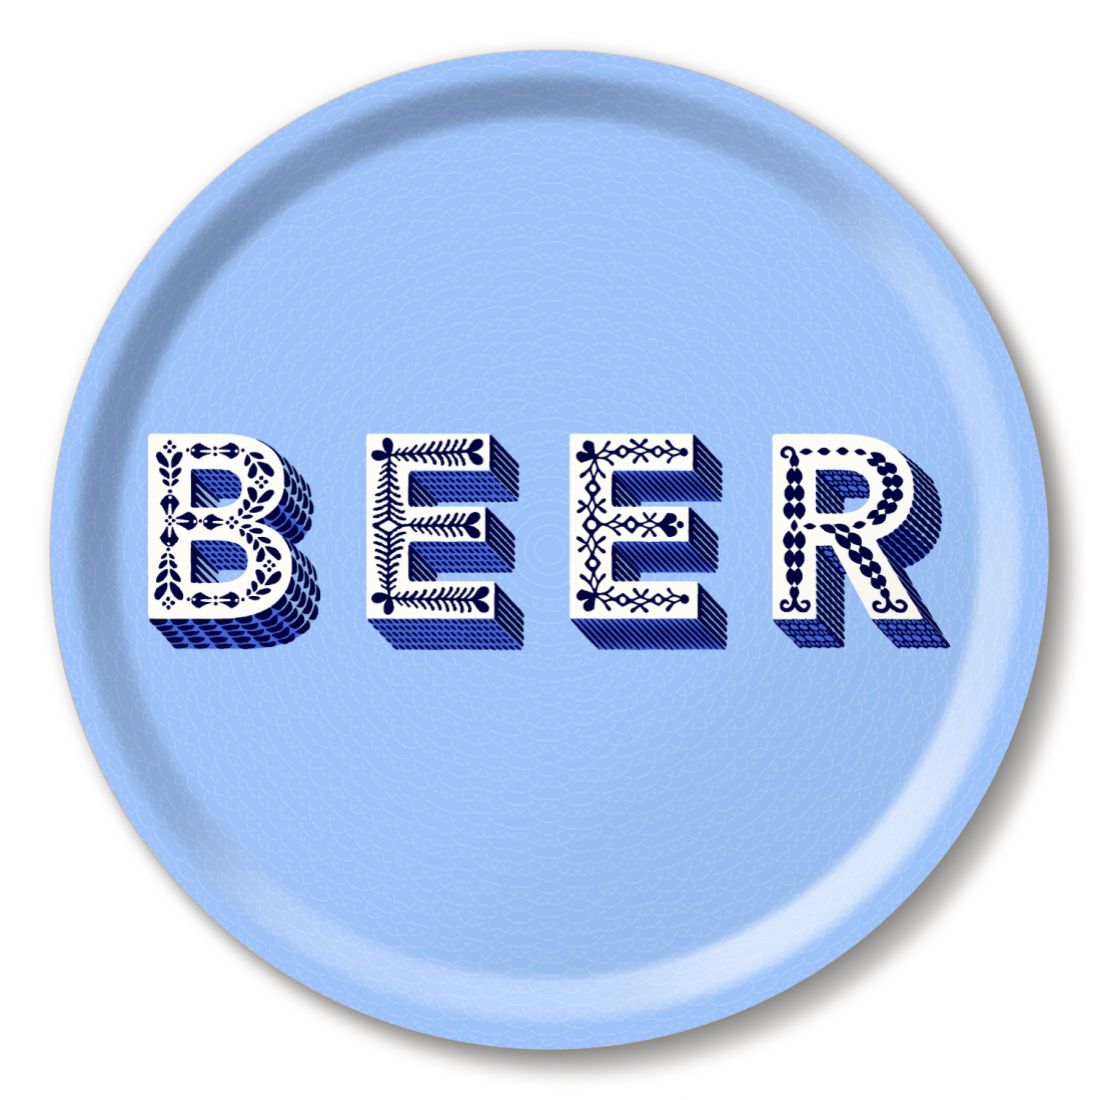 Serving Trays - Asta Barrington - Asta Barrington "Beer" Blue Round Tray (31cm)